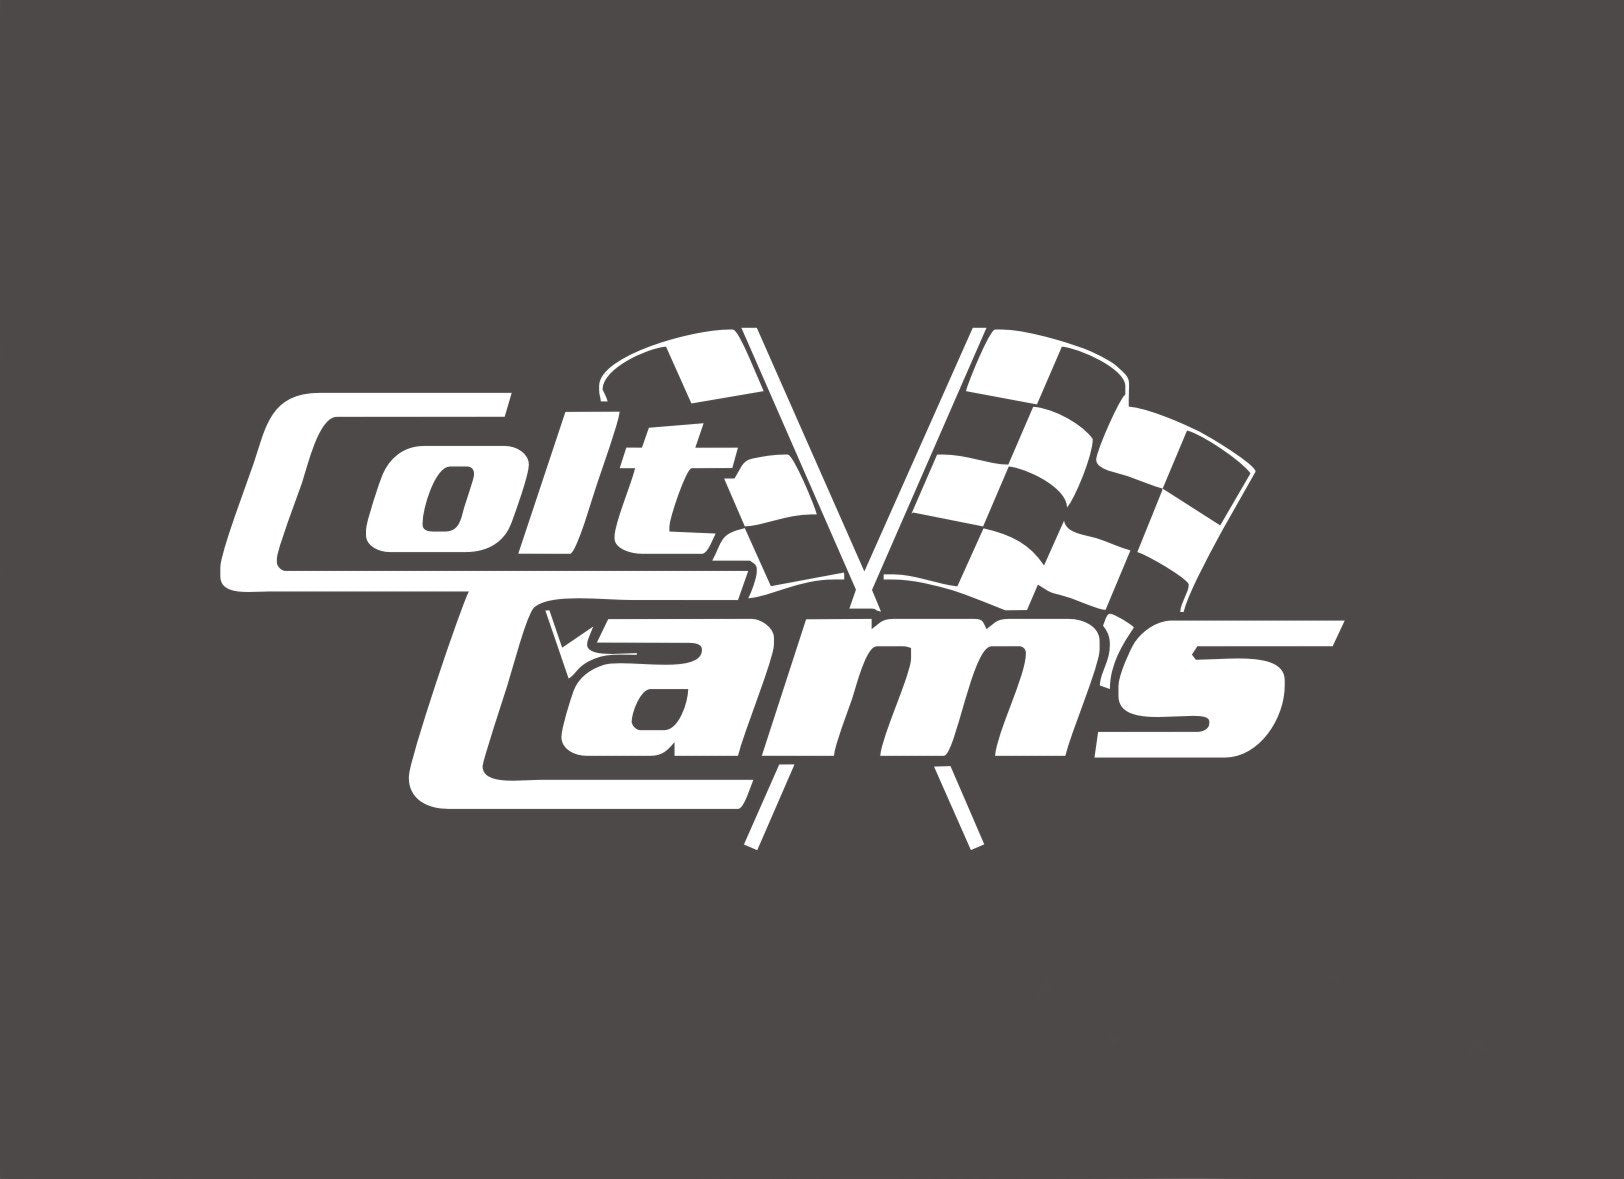 Colt Cams